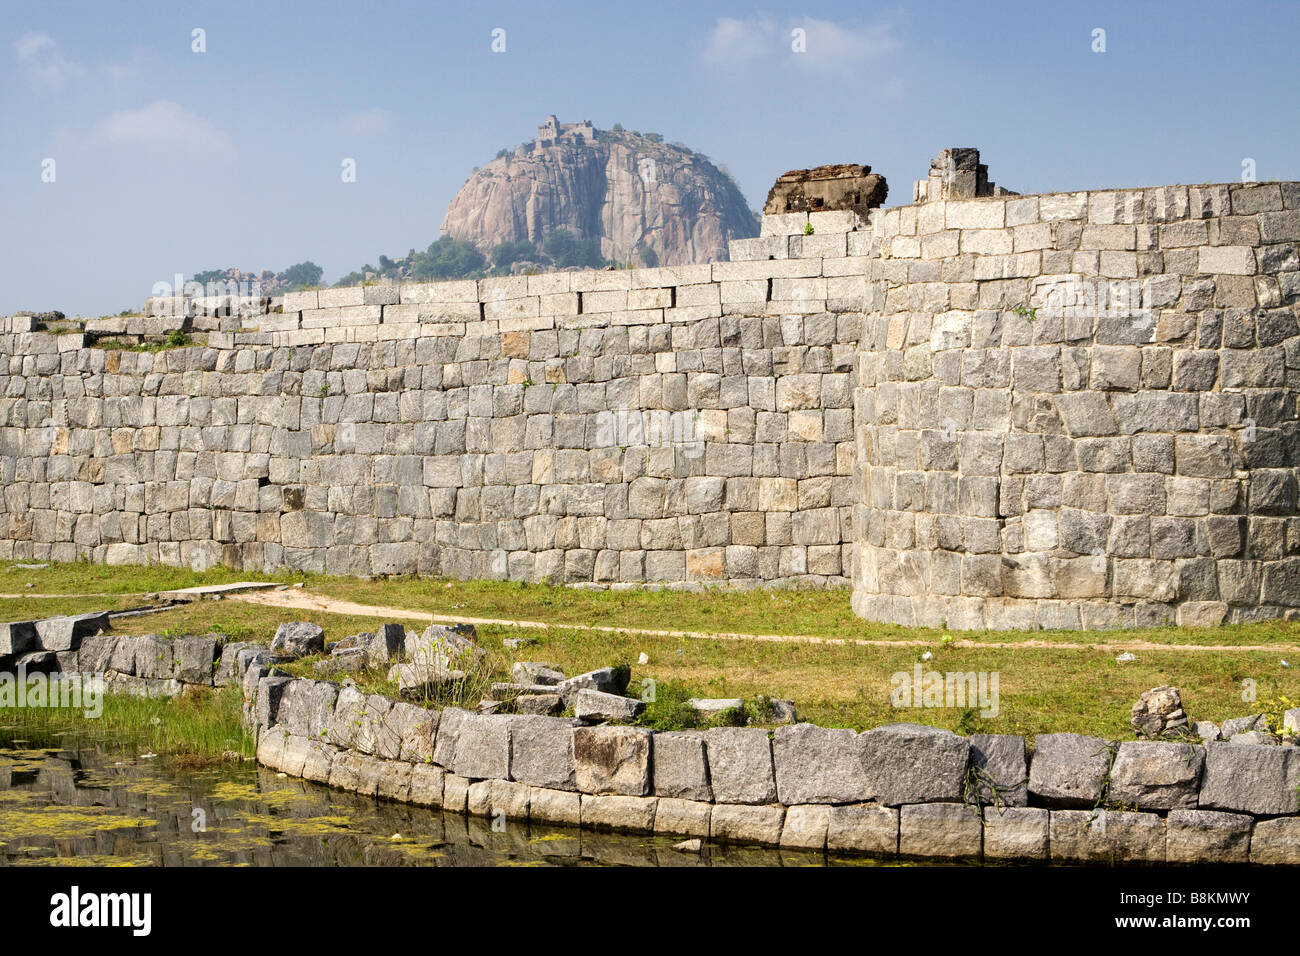 India Tamil Nadu Gingee Fort Krishnagiri hilltop fort walls and moat Stock Photo